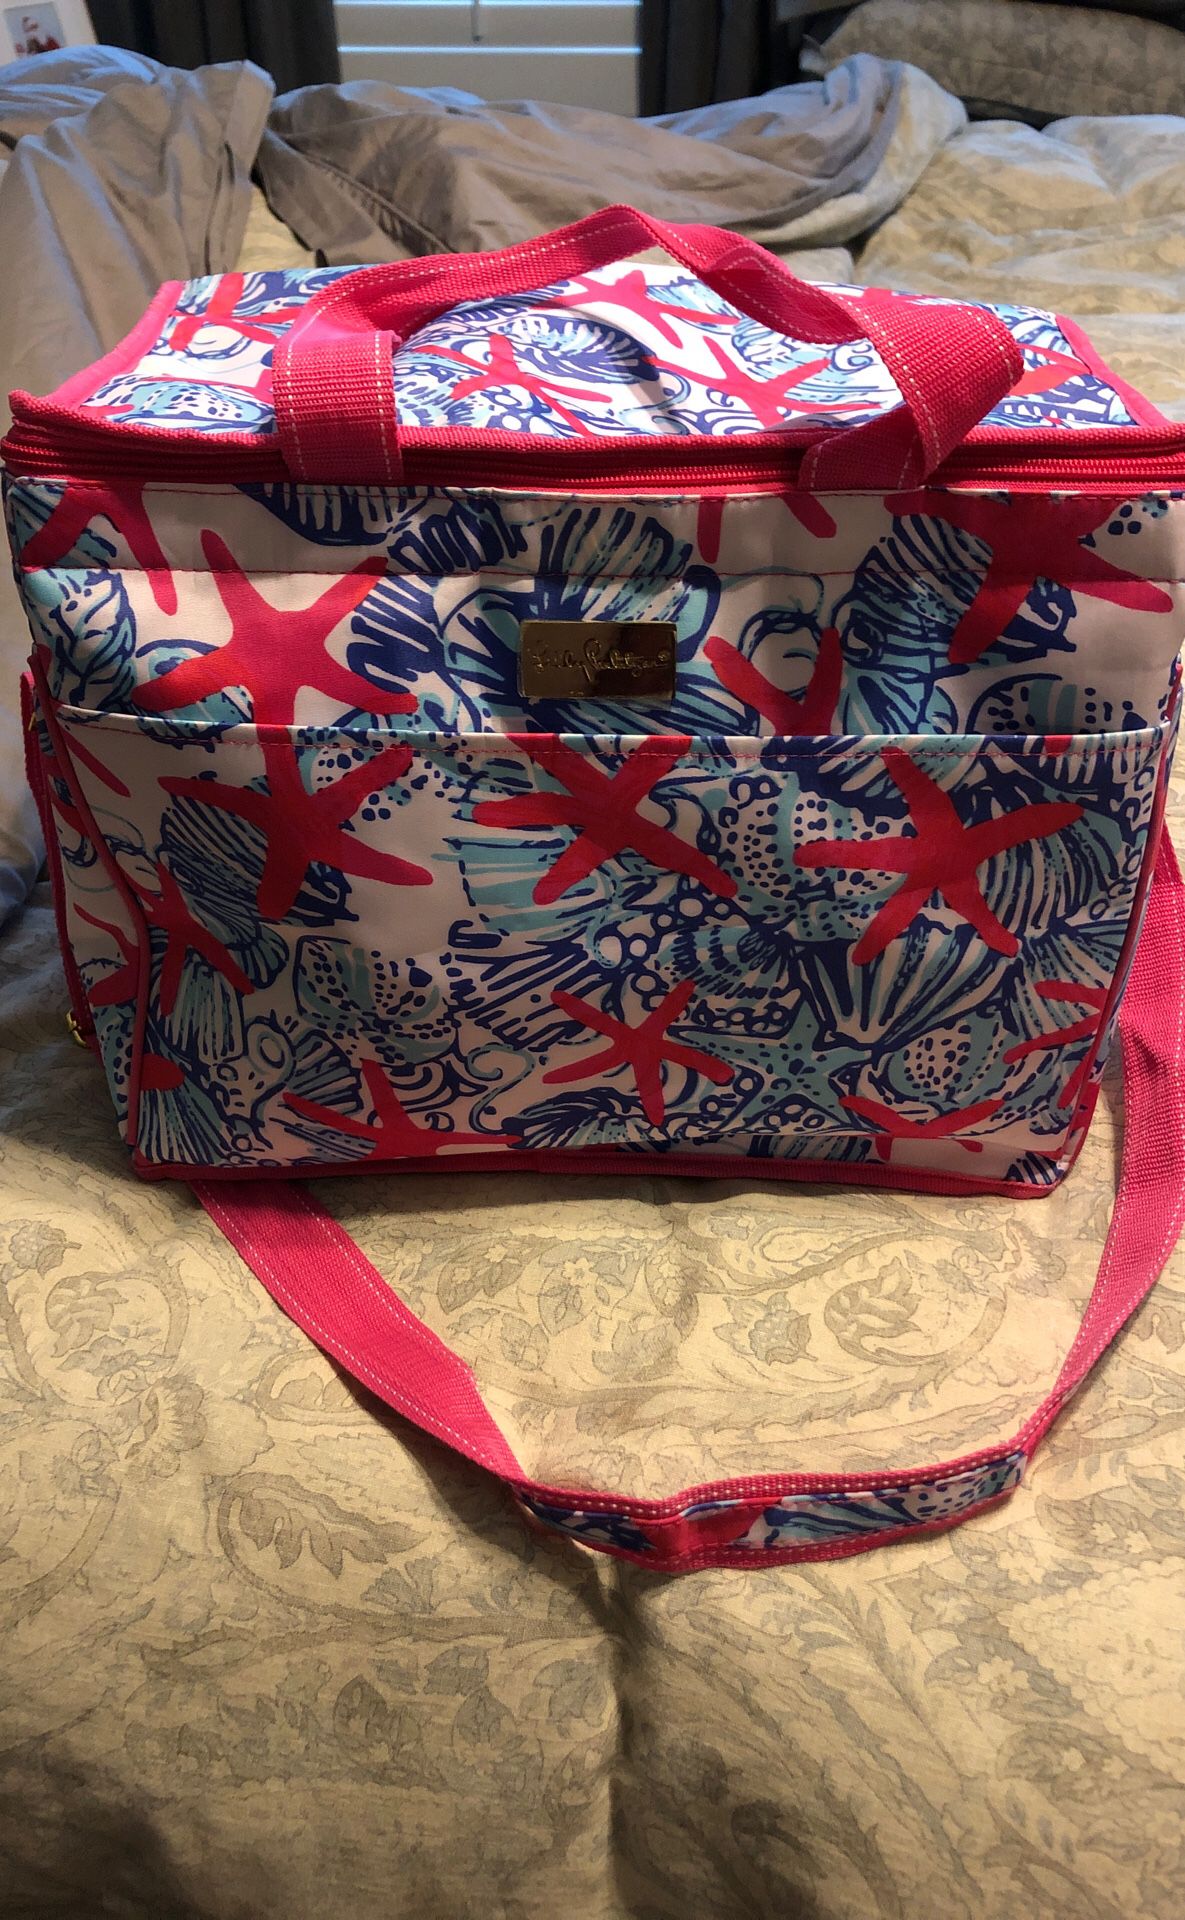 Lily Pulitzer Cooler/beach bag